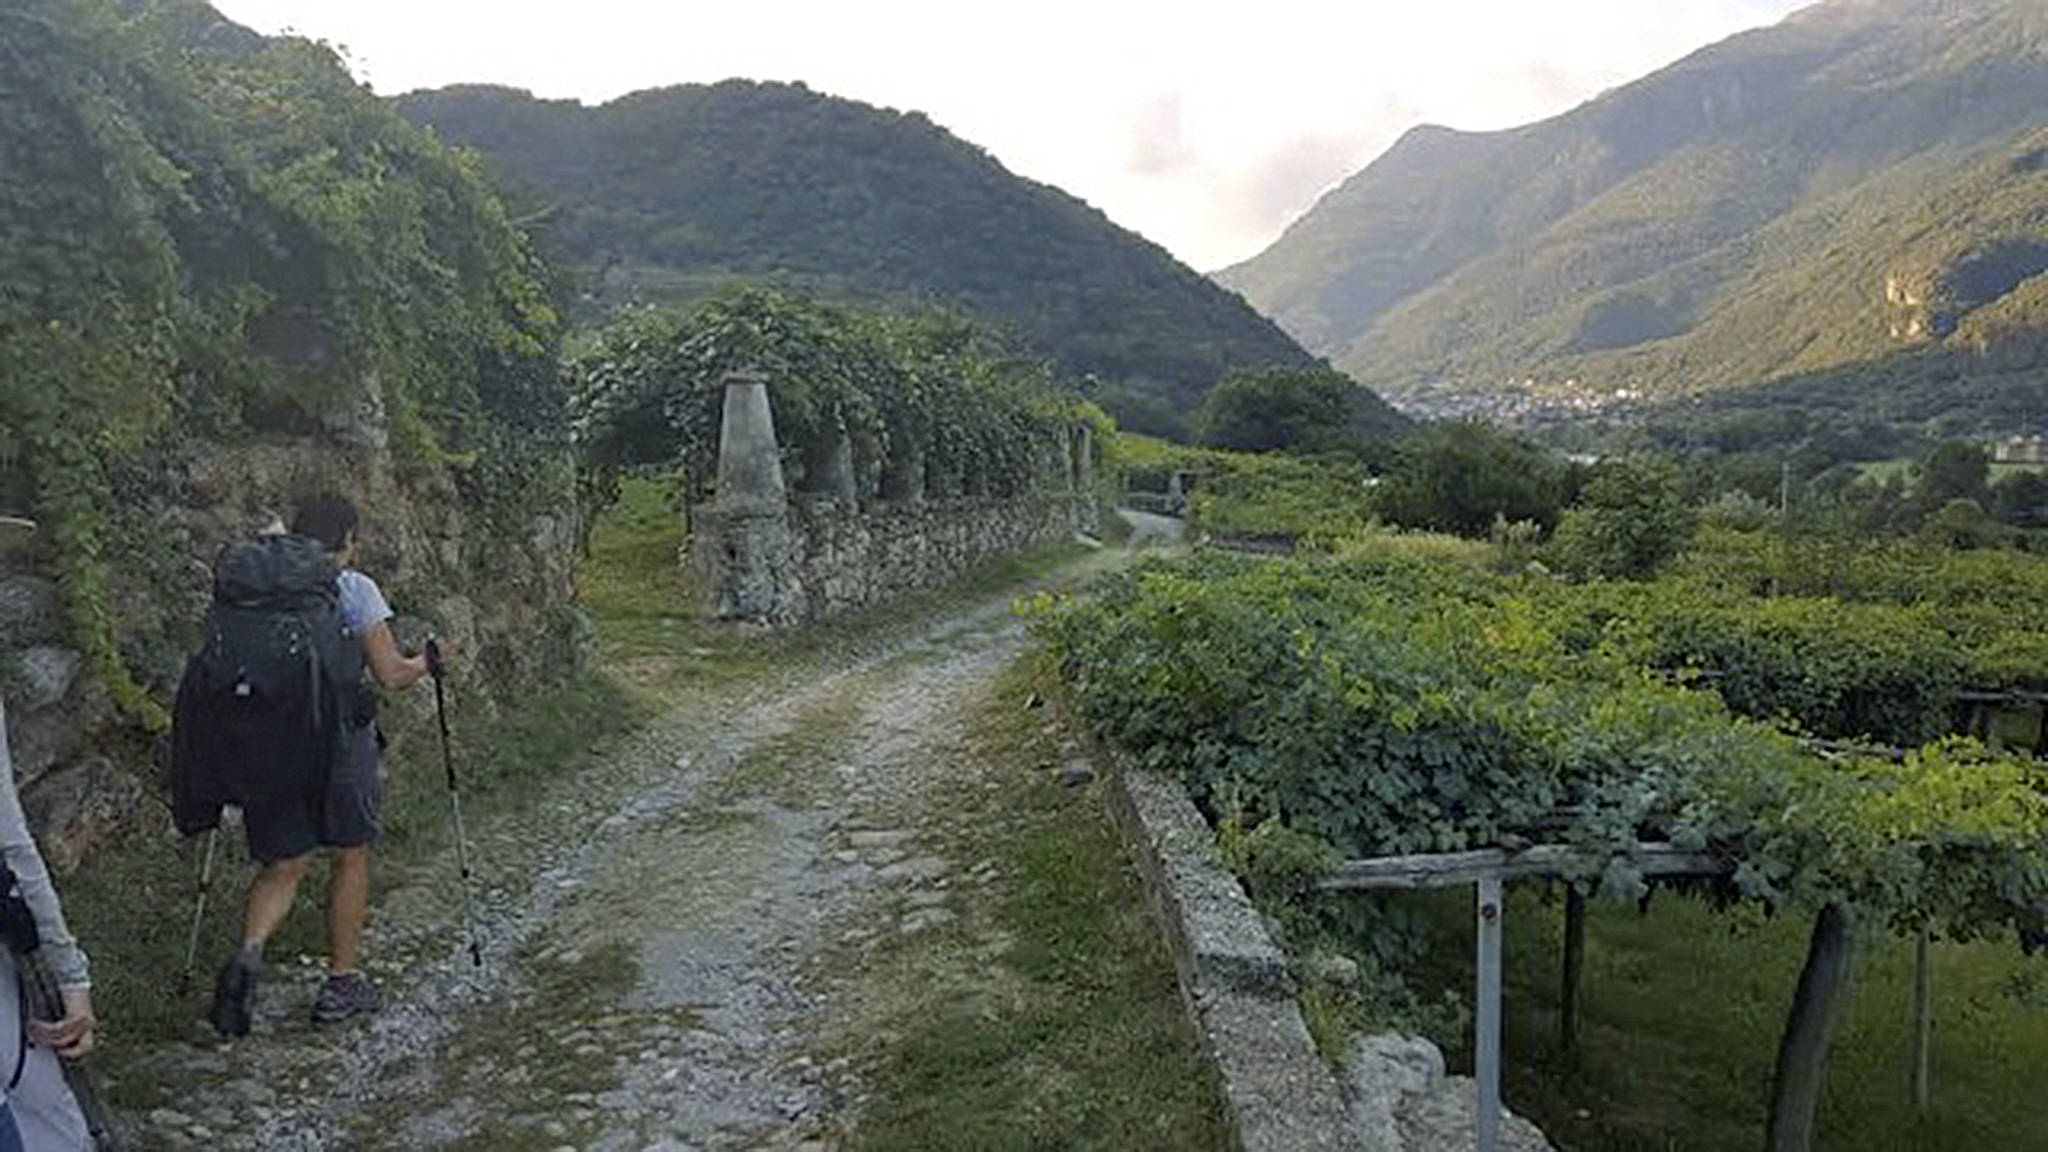 Carla Mackey photo | Pilgrims walk through a vineyard in northern Italy.                                 Carla Mackey photo | Pilgrims walk through a vineyard in northern Italy.